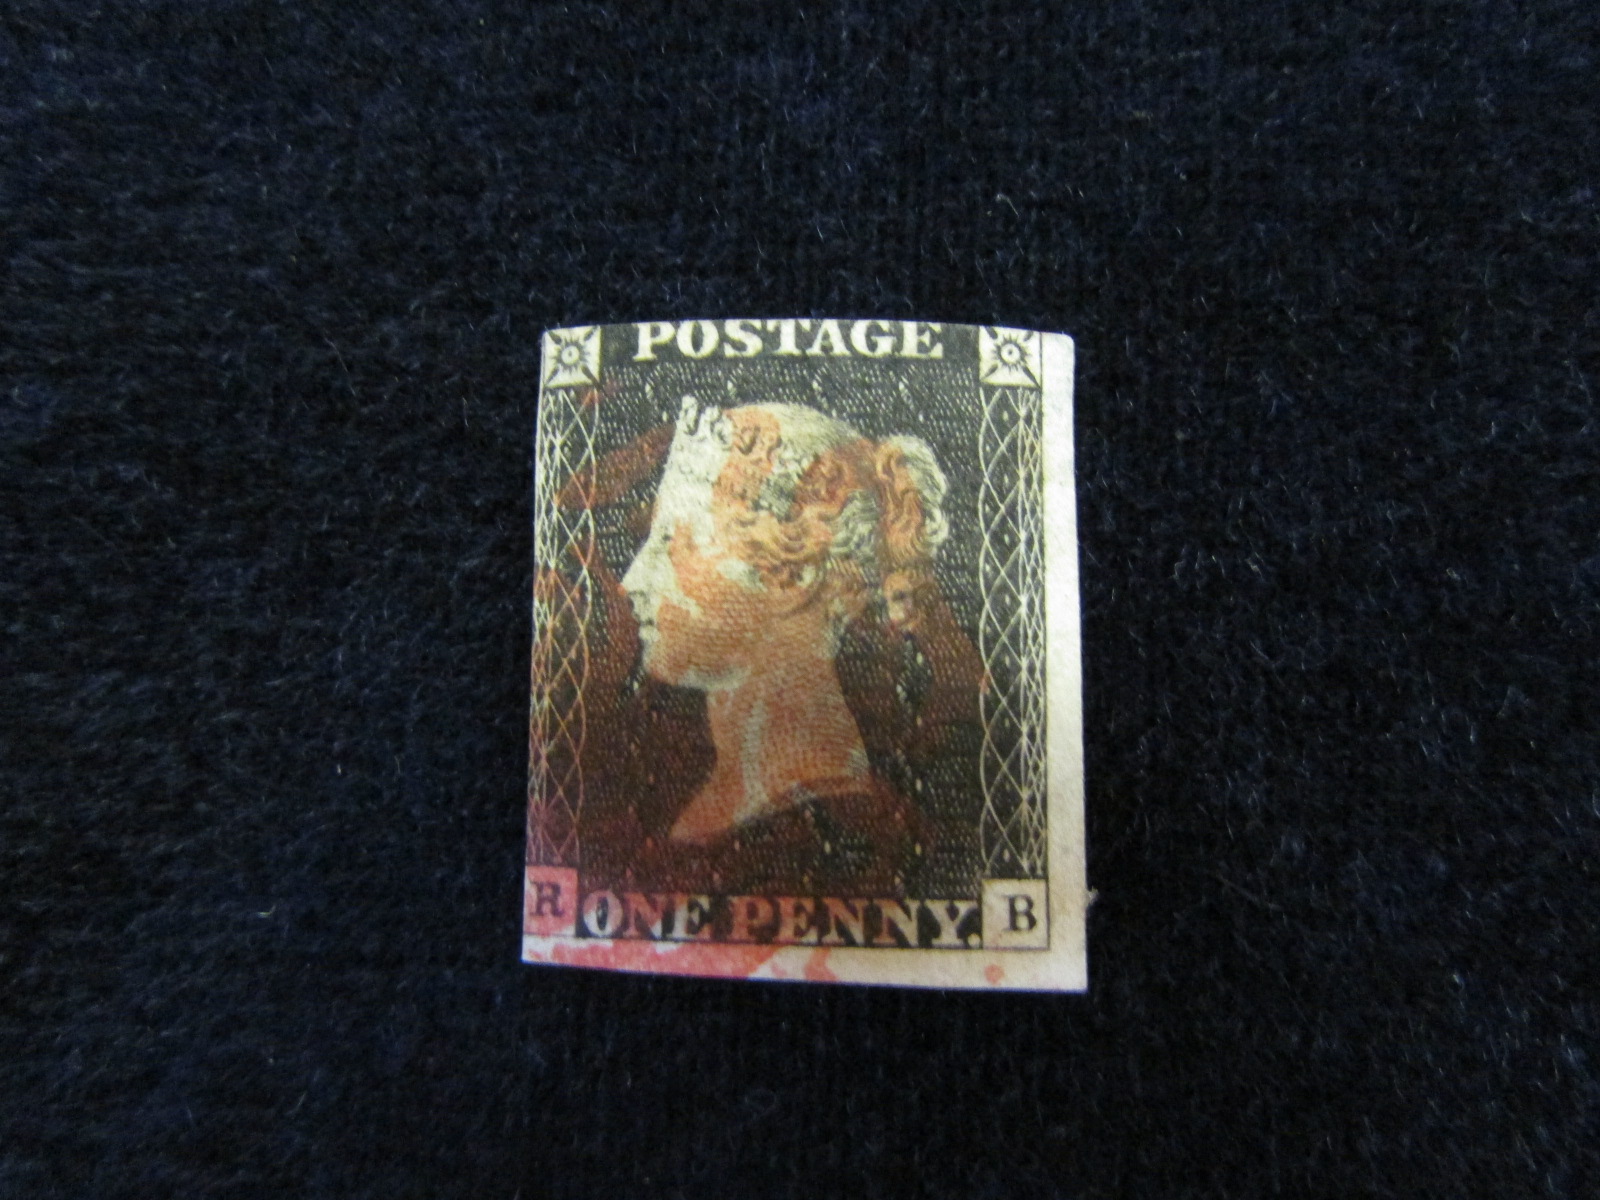 GB 1840 1d Penny Black (R-B) identified as Plate 3, 2 huge margins but design very slightly shaved